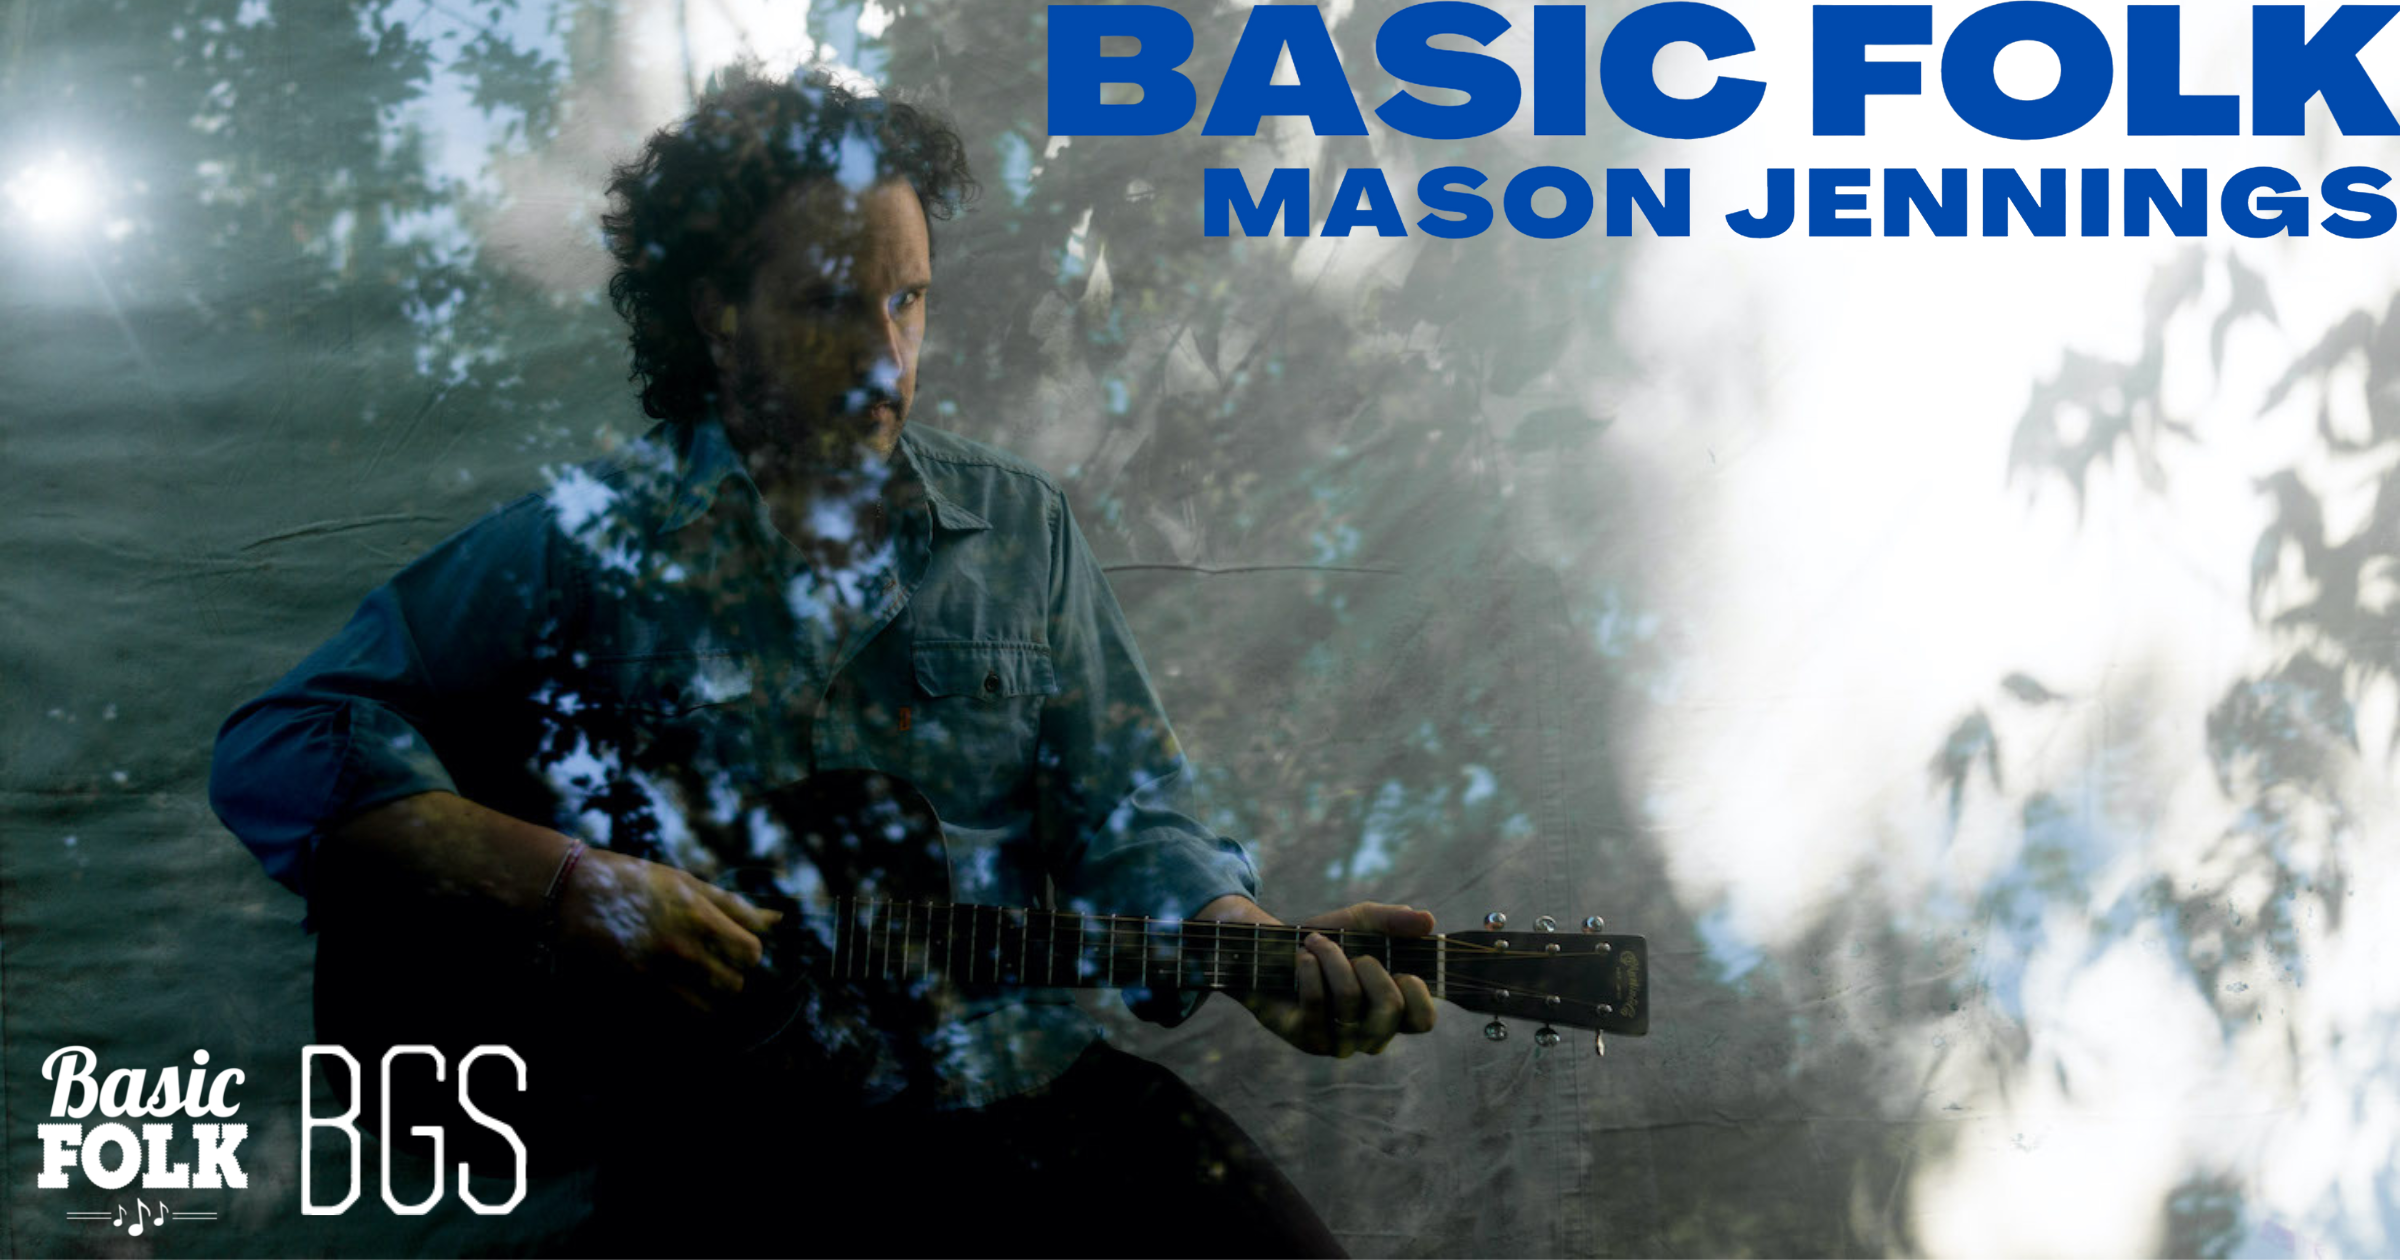 Basic Folk - Mason Jennings